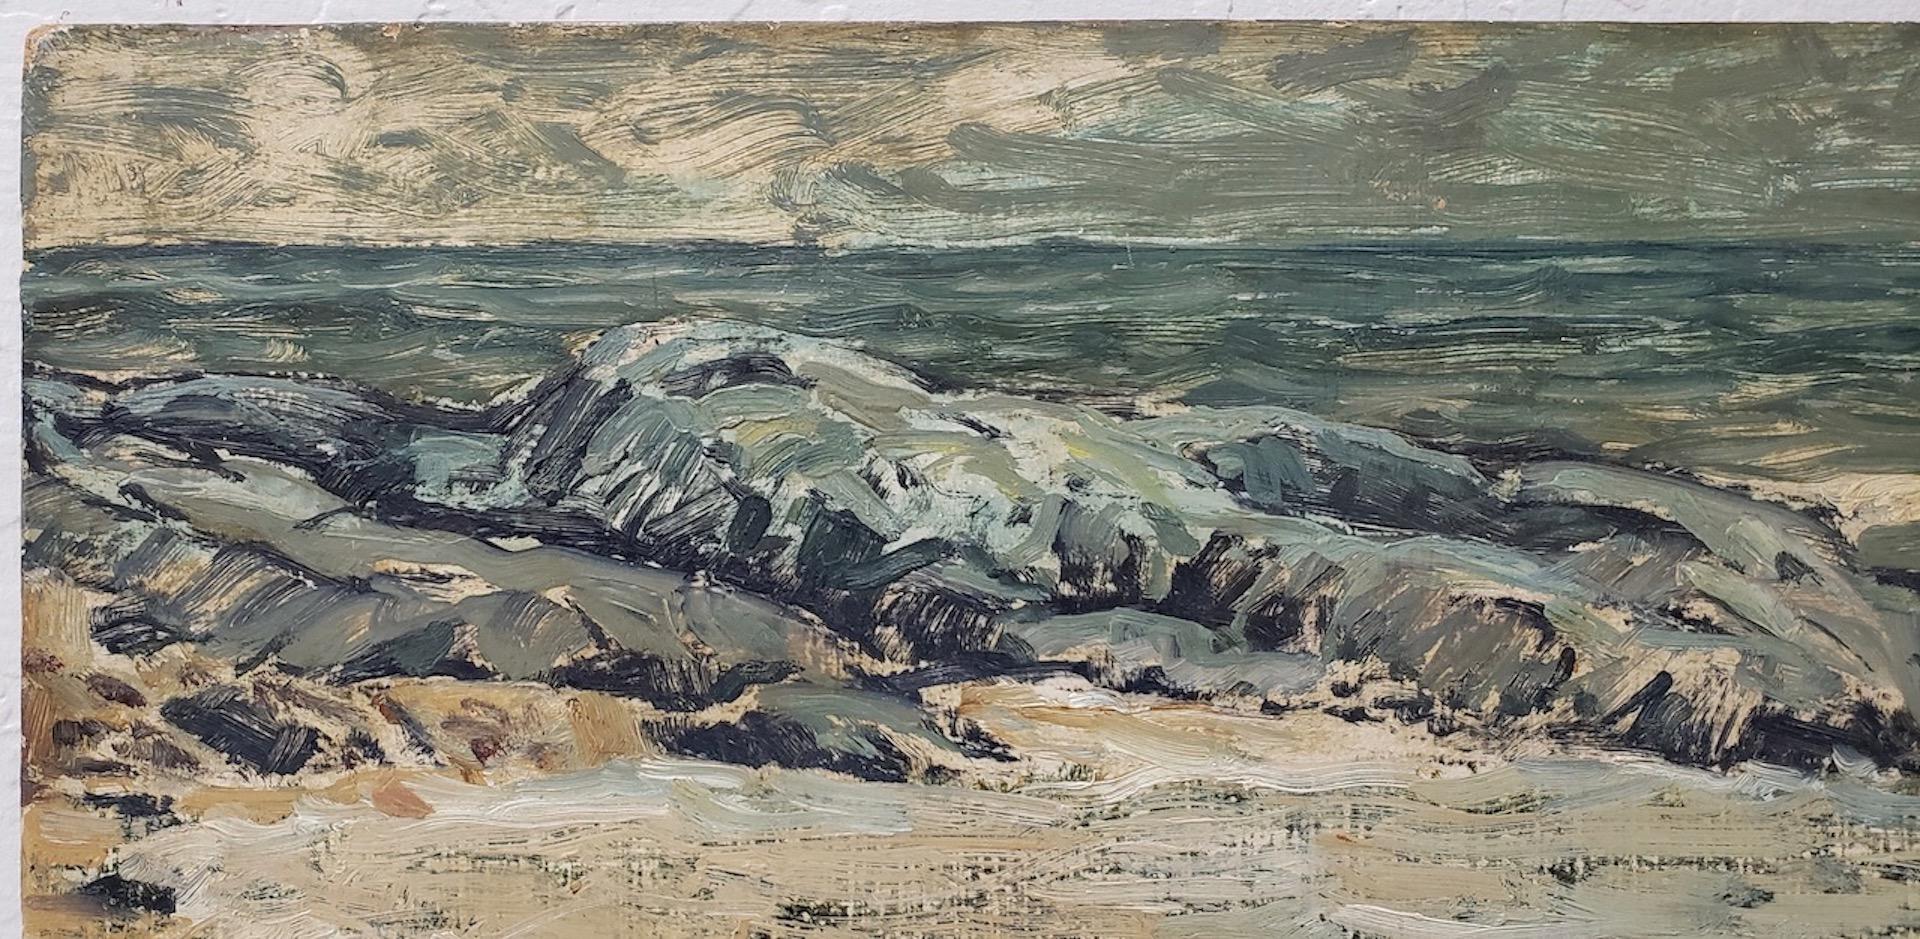 Elliot Torrey (1867-1949) Coastal Landscape Oil Painting c.1920s

Original oil painting by listed California / Vermont artist Elliot Torrey.

Oil on board. Dimensions 18